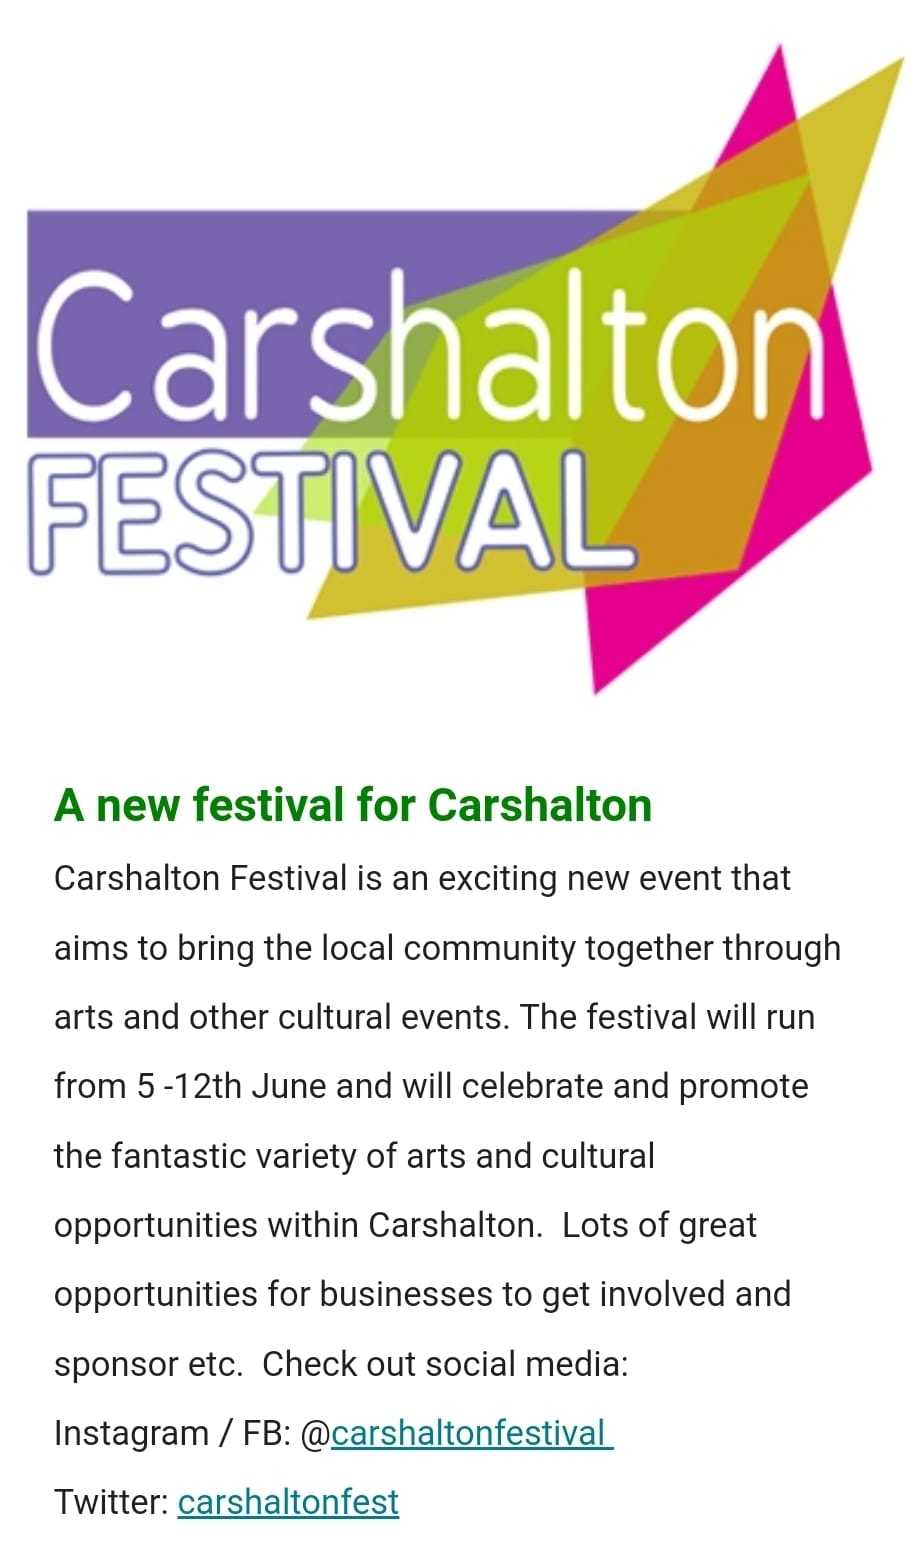 Carshalton Festival, 5-12th June